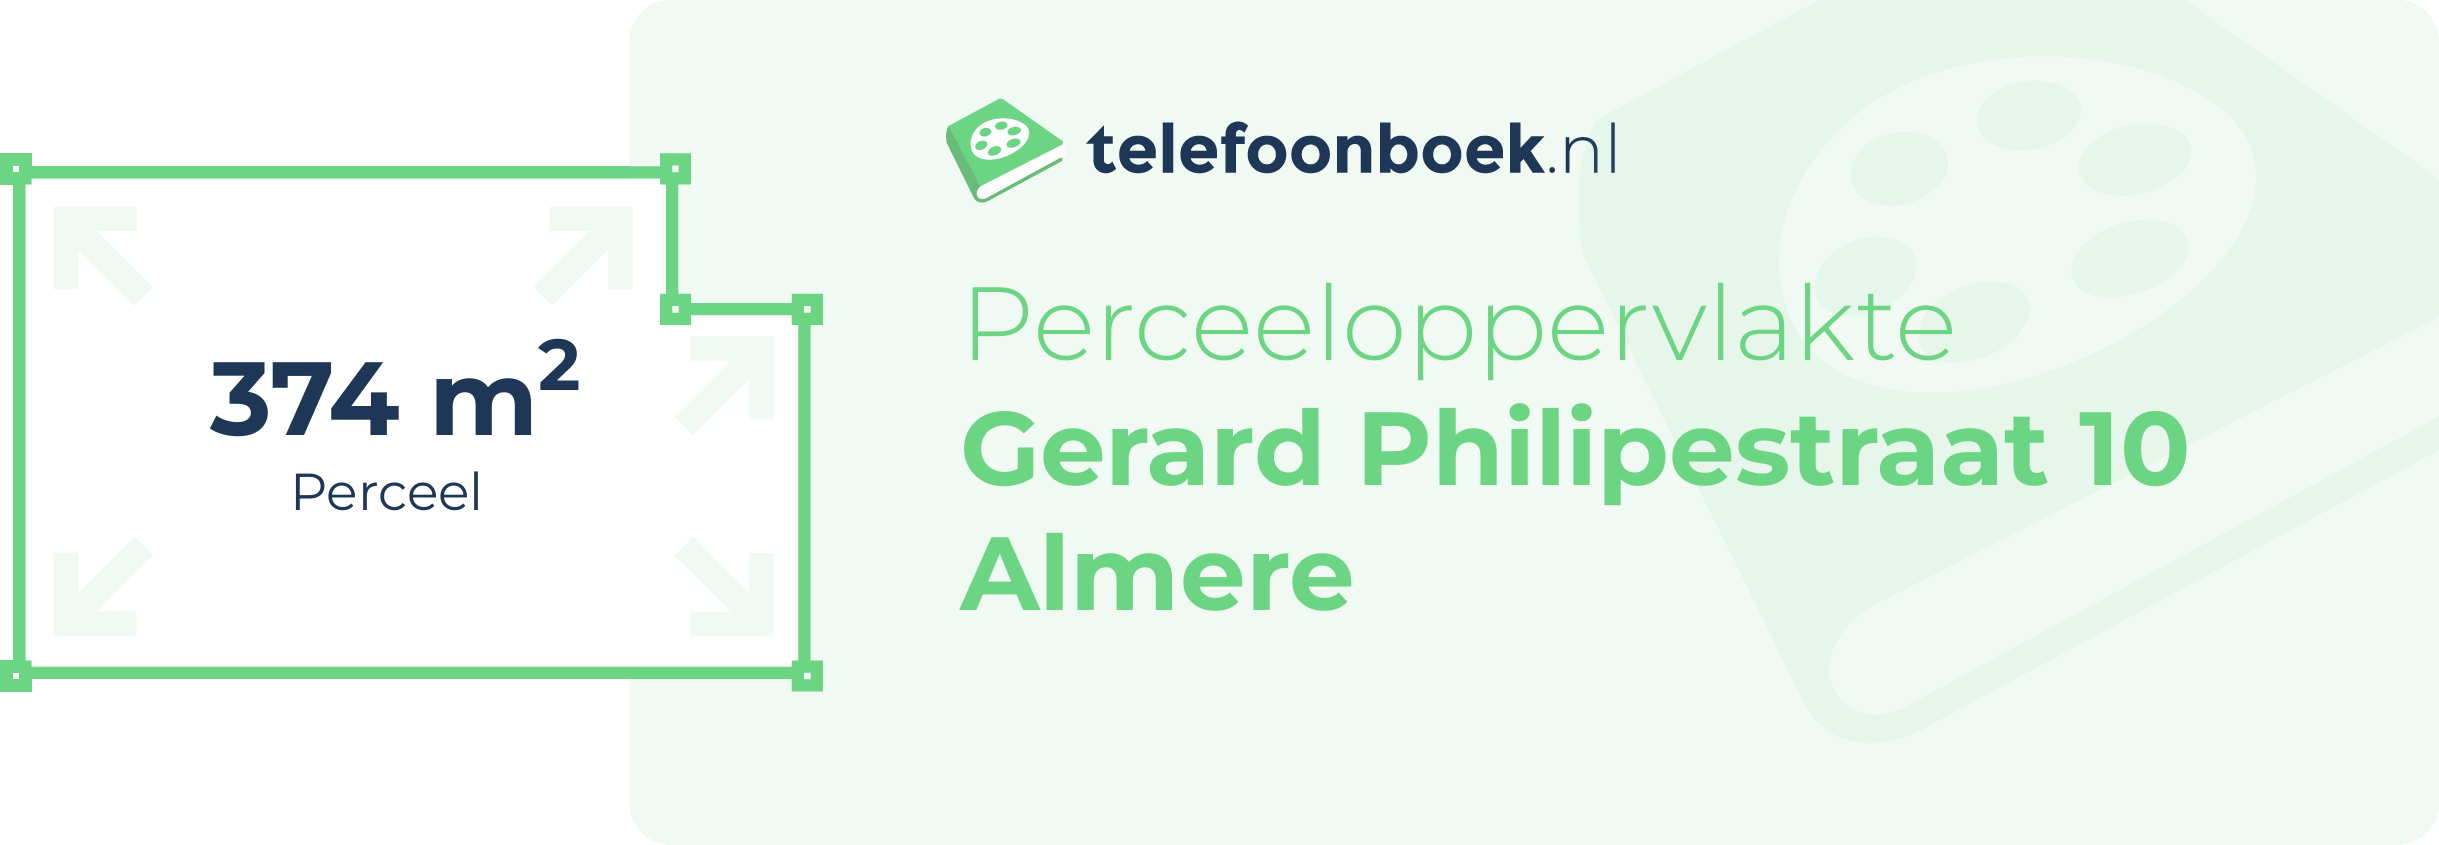 Perceeloppervlakte Gerard Philipestraat 10 Almere